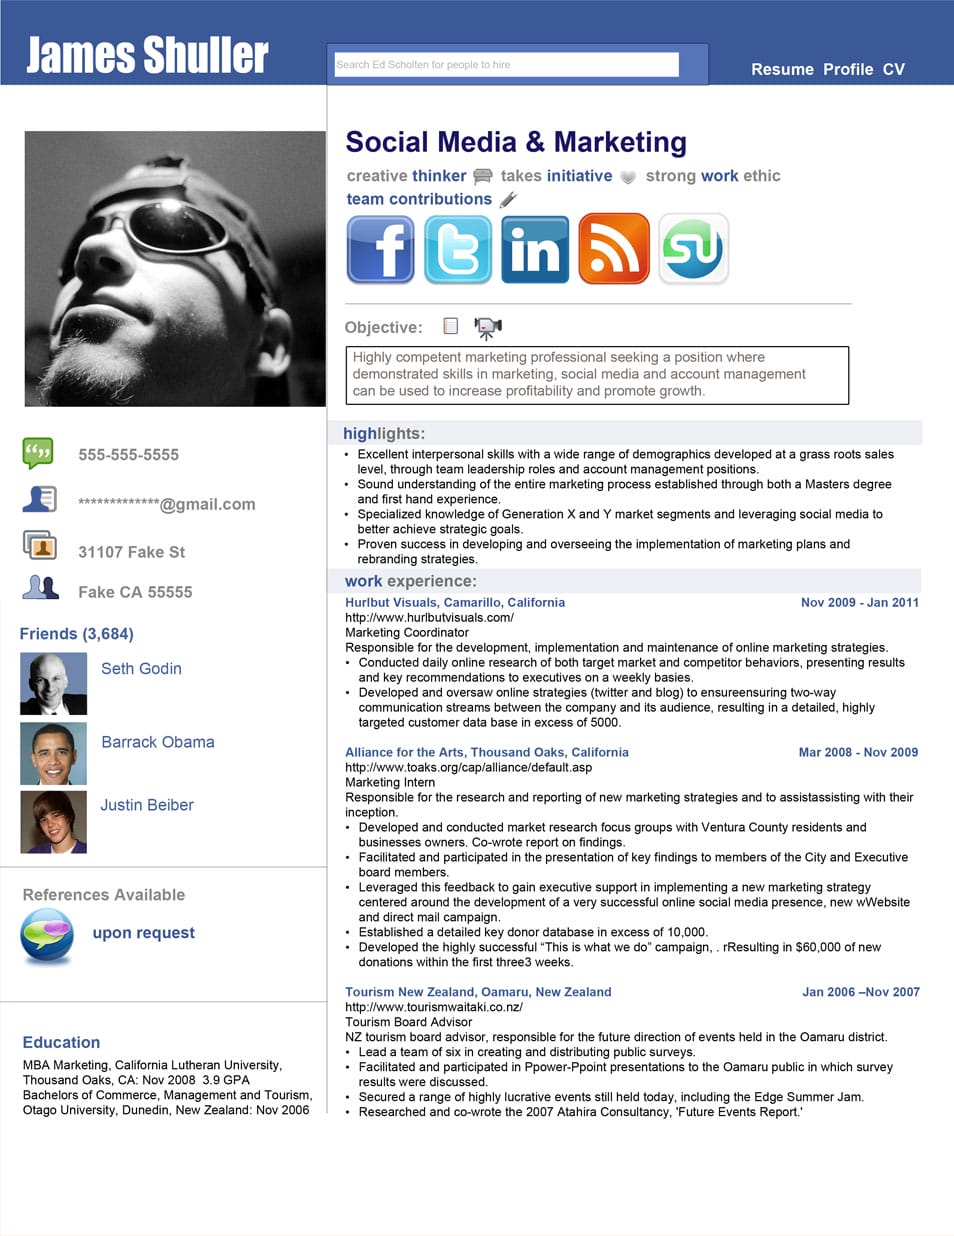 Resume - Social Network Adv.